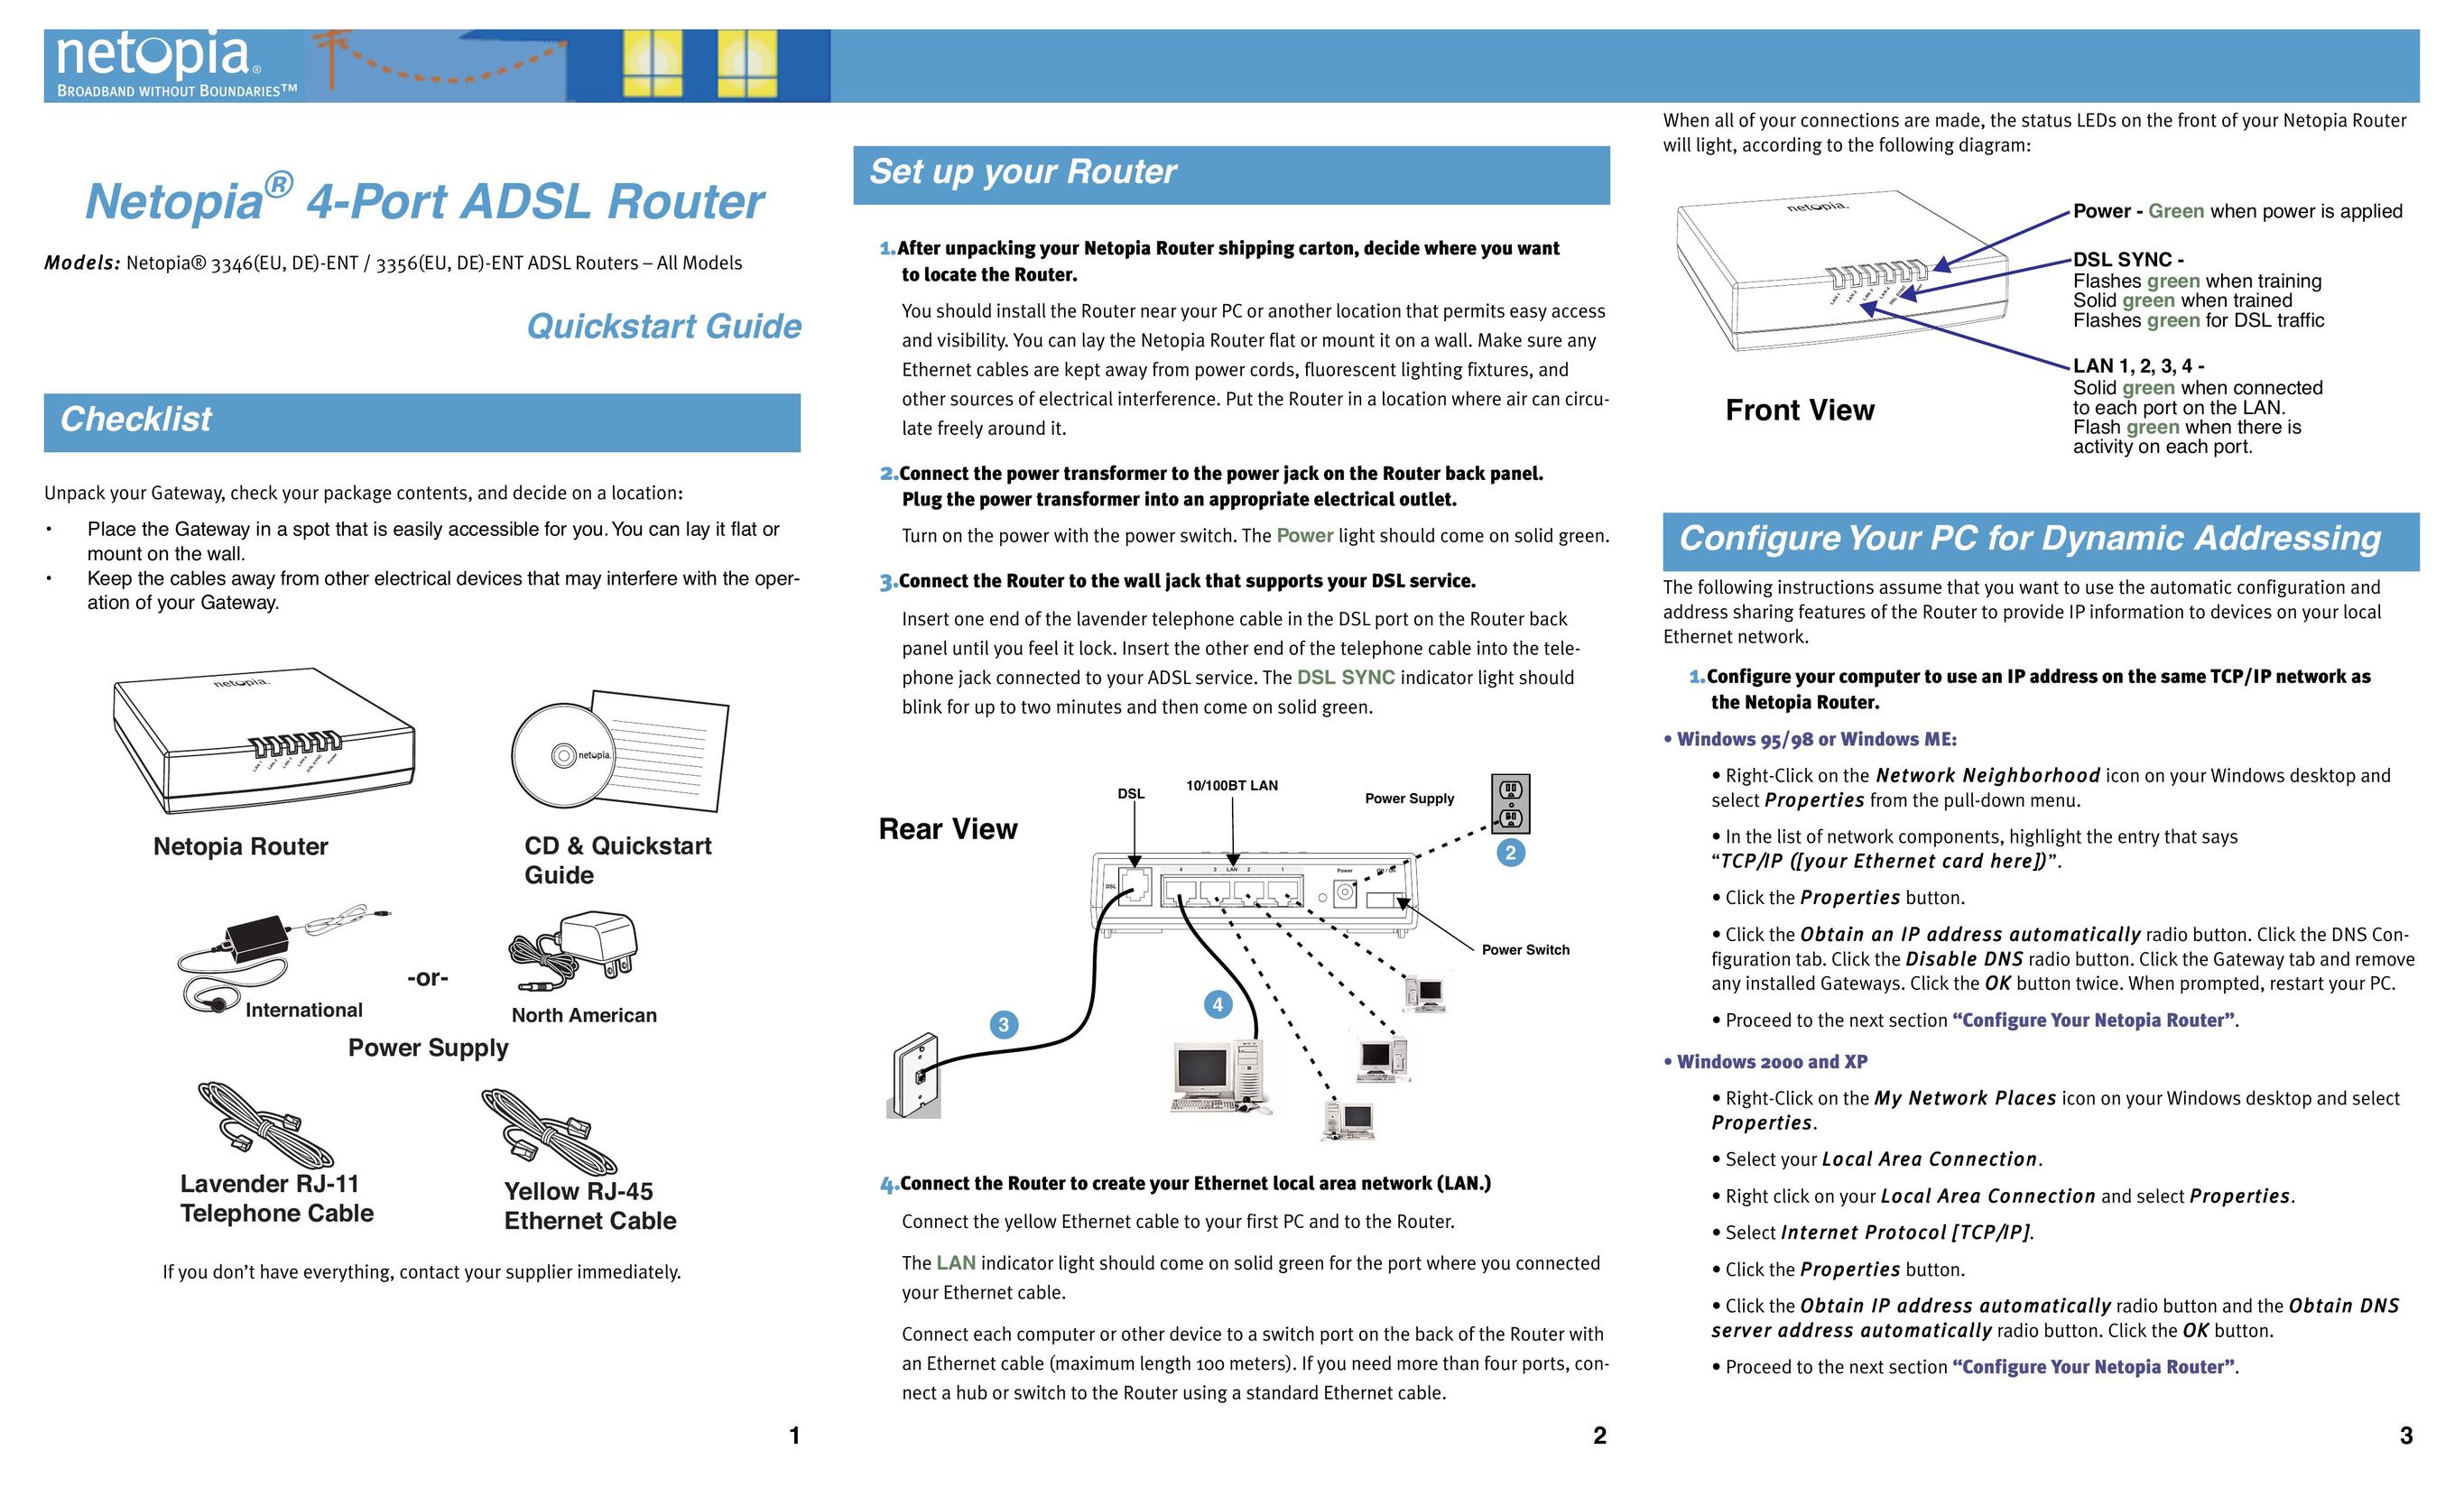 Netopia 3356(EU Network Router User Manual